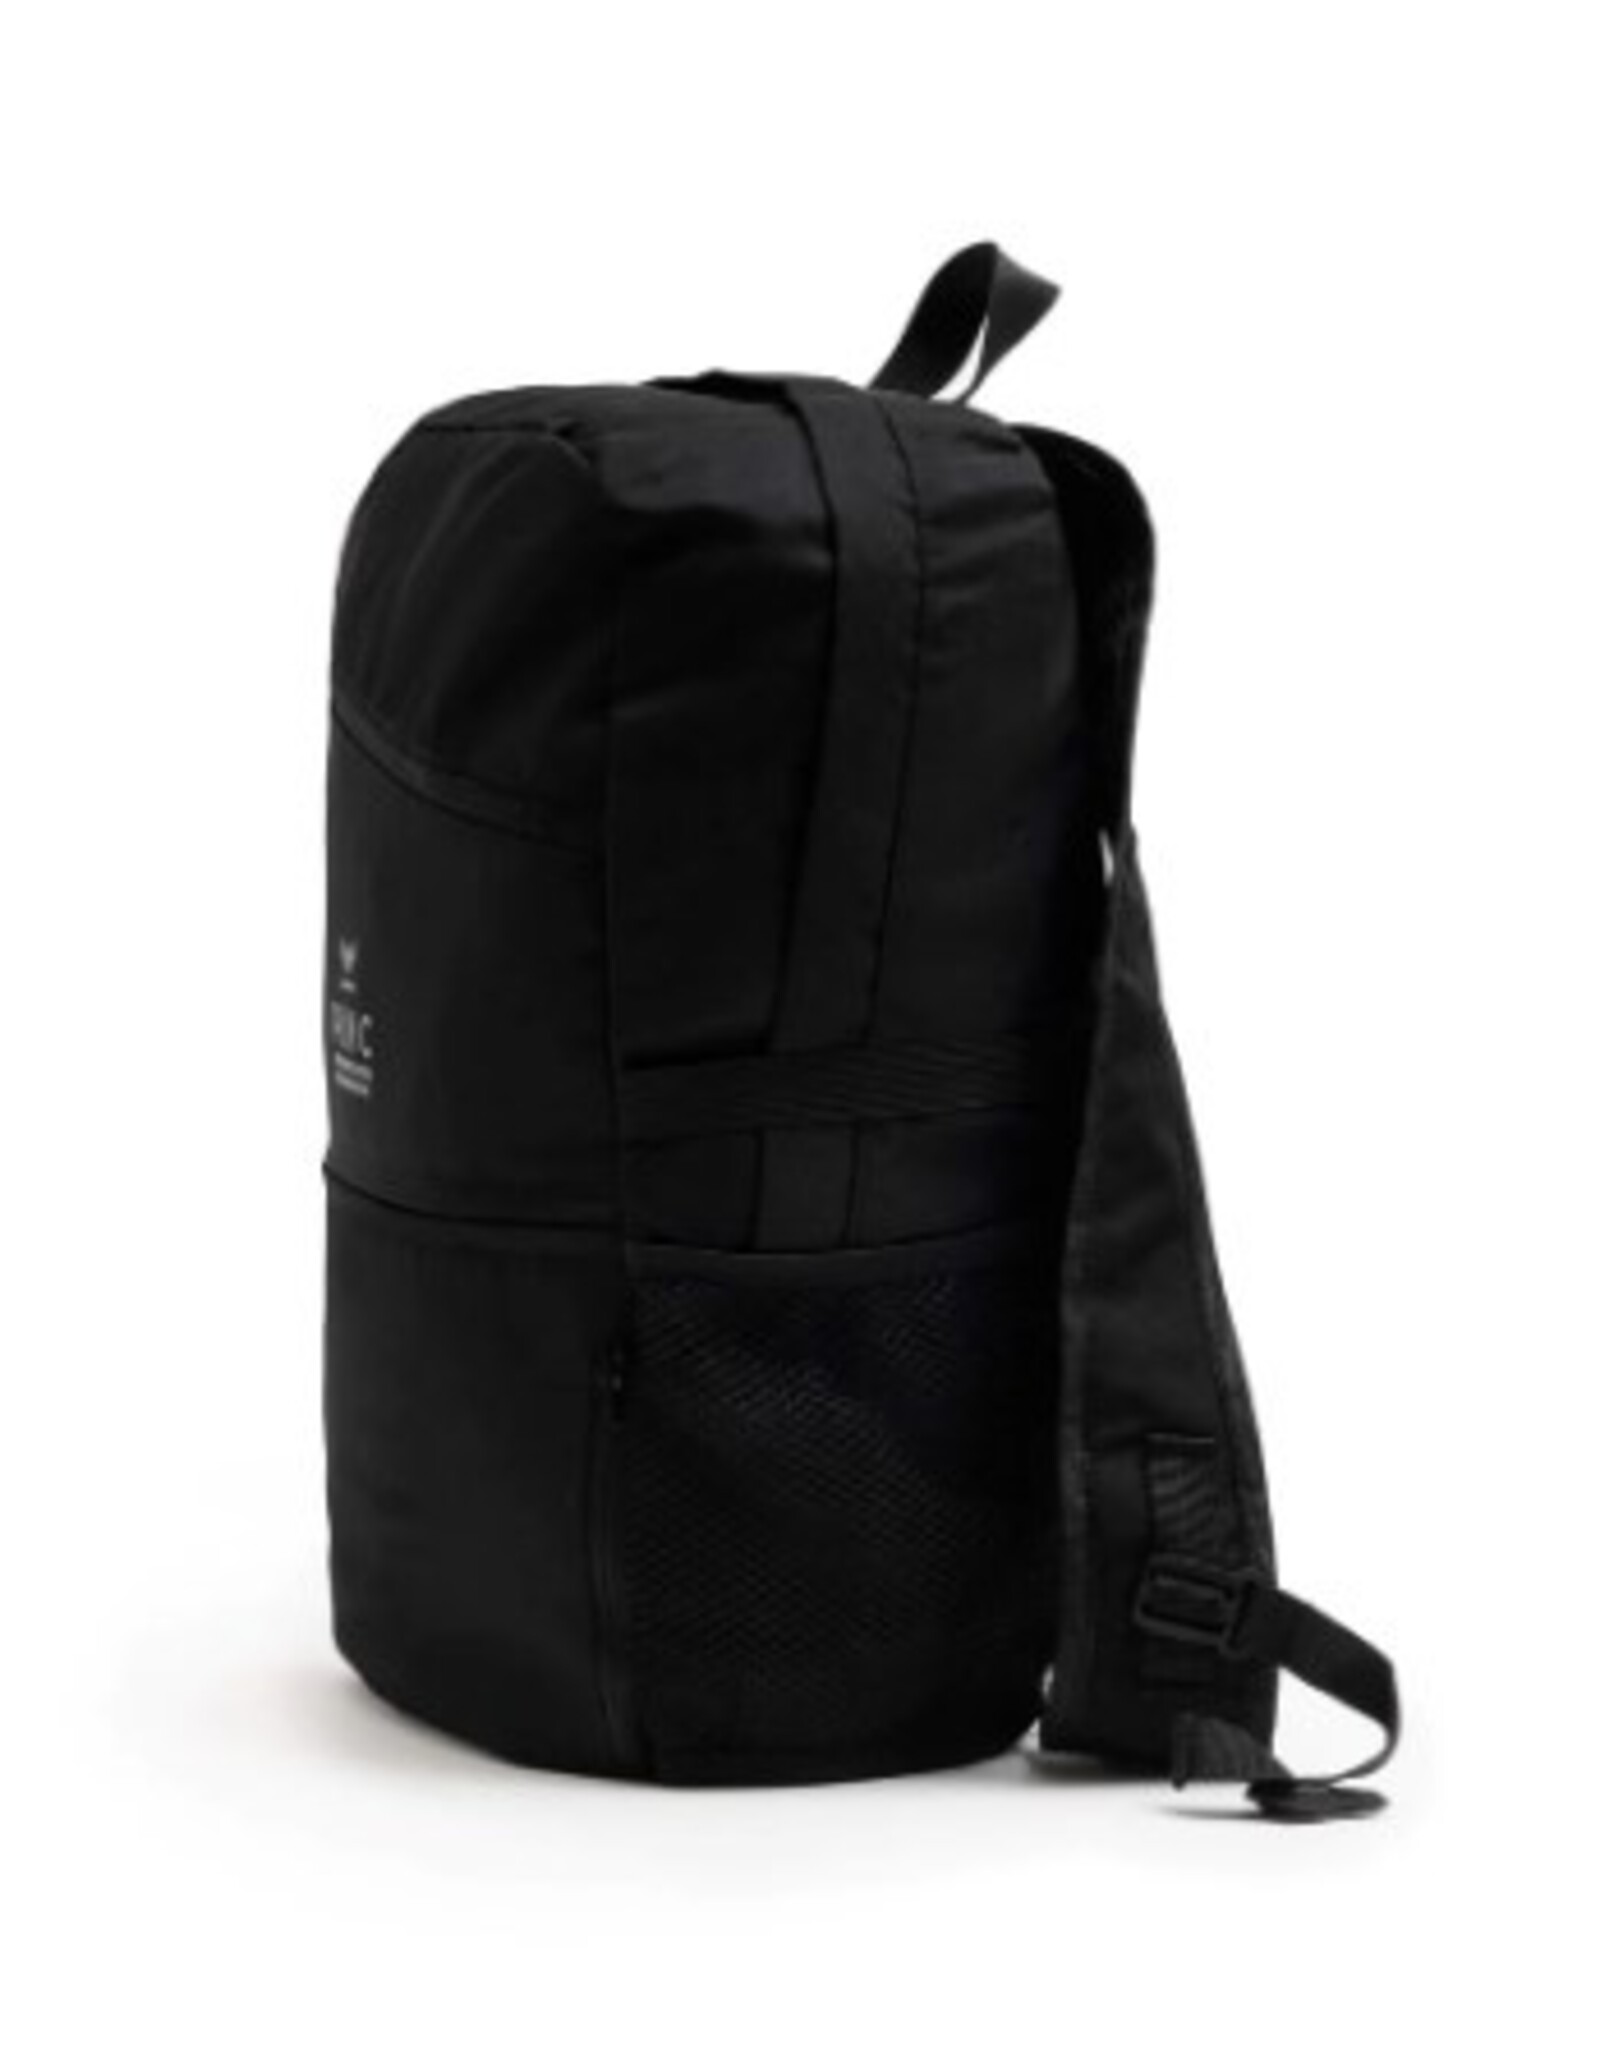 PKNC Backpack Pack N Carry 18L foldable